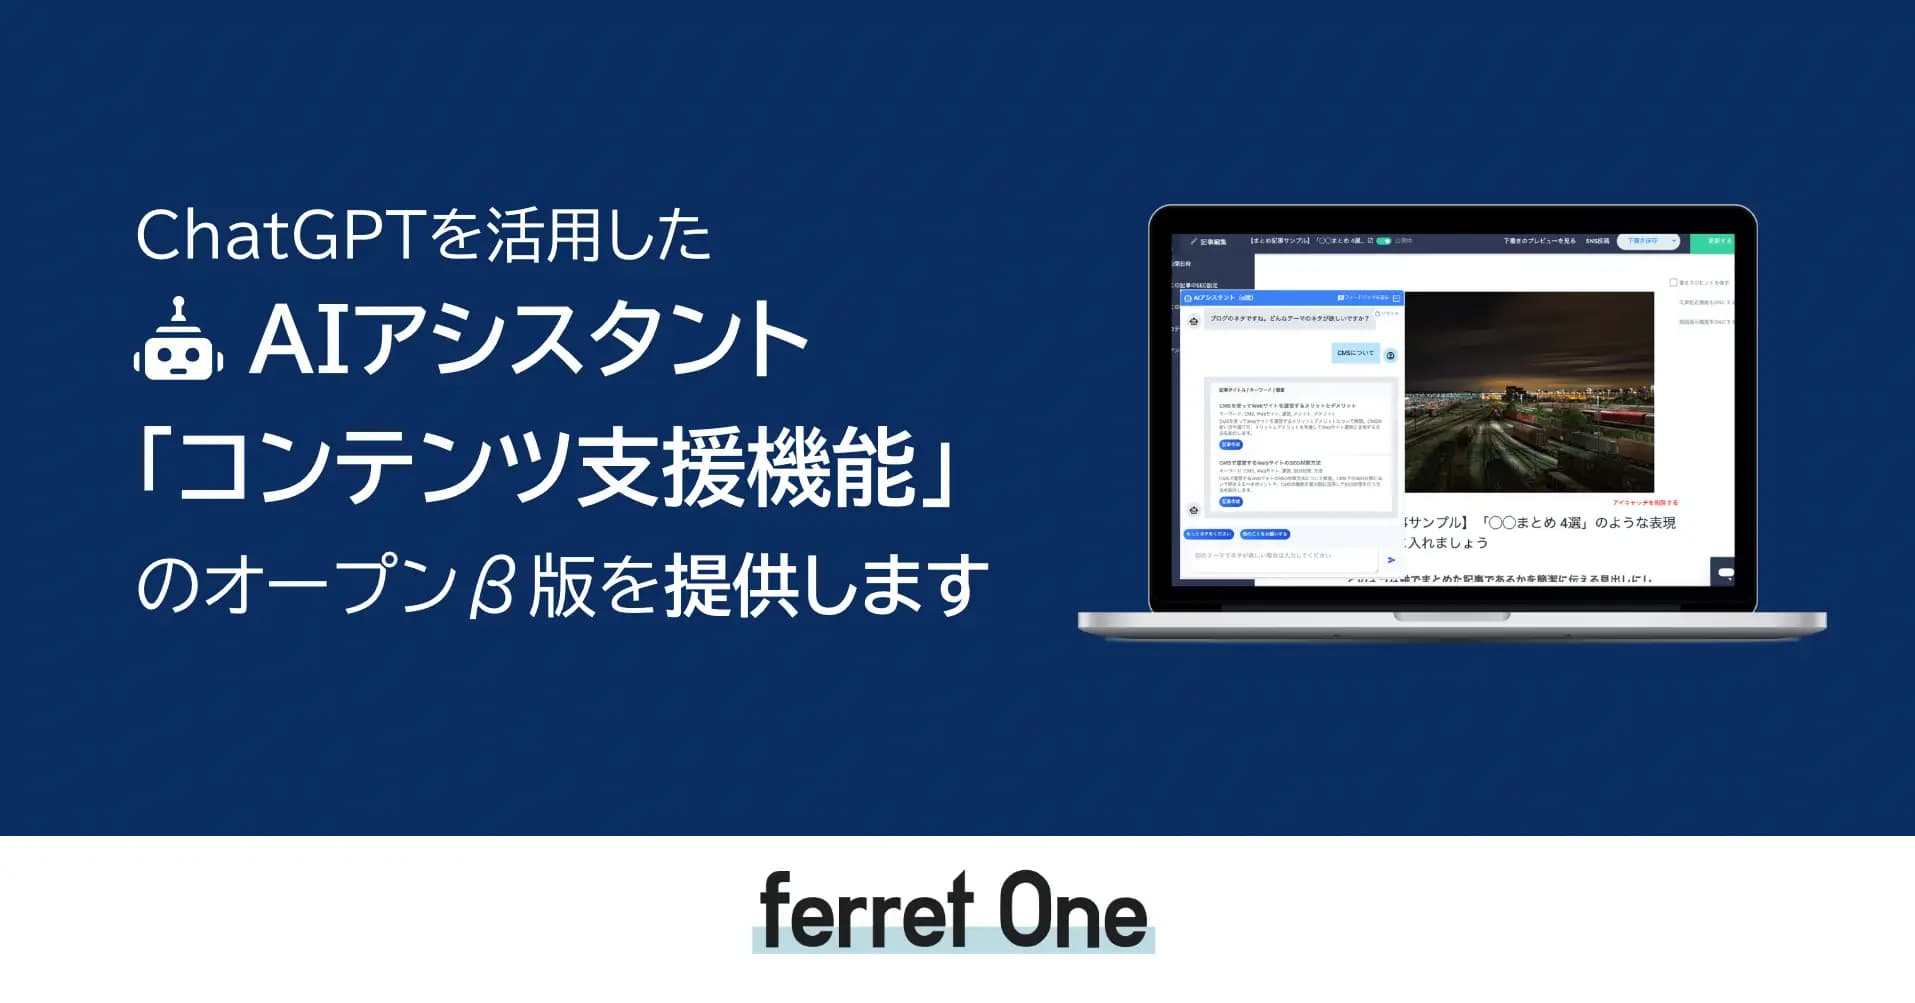 BtoBマーケティングをトータルサポート「ferret One」